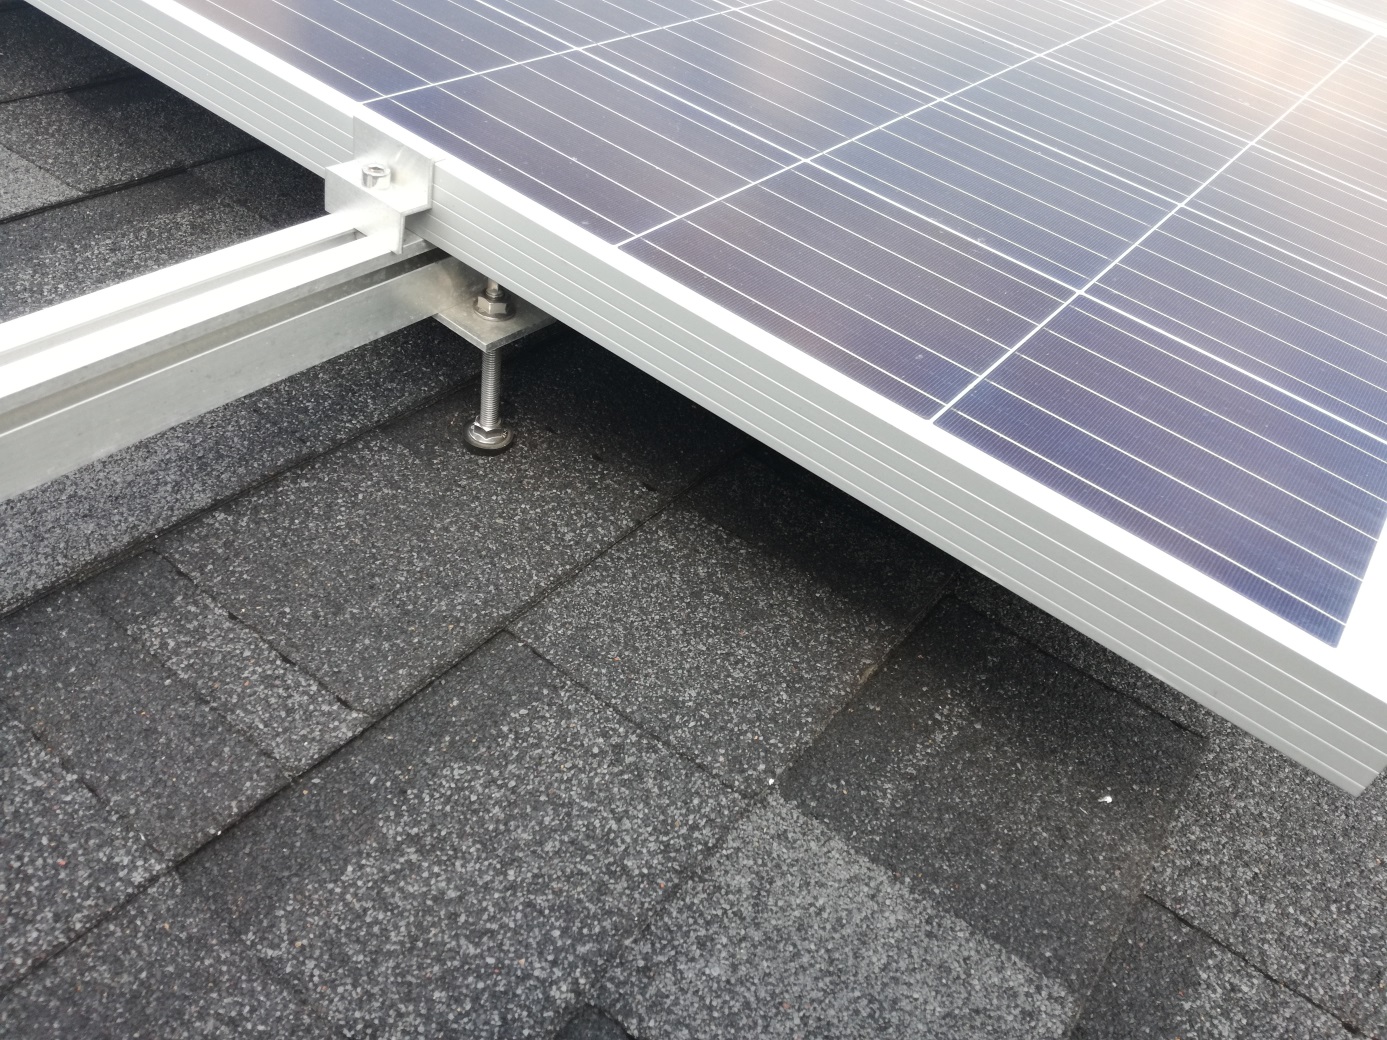 https://sunectricsolar.com/wp-content/uploads/2020/05/3-Fixation-photovoltaics-on-shingles-roof.jpg